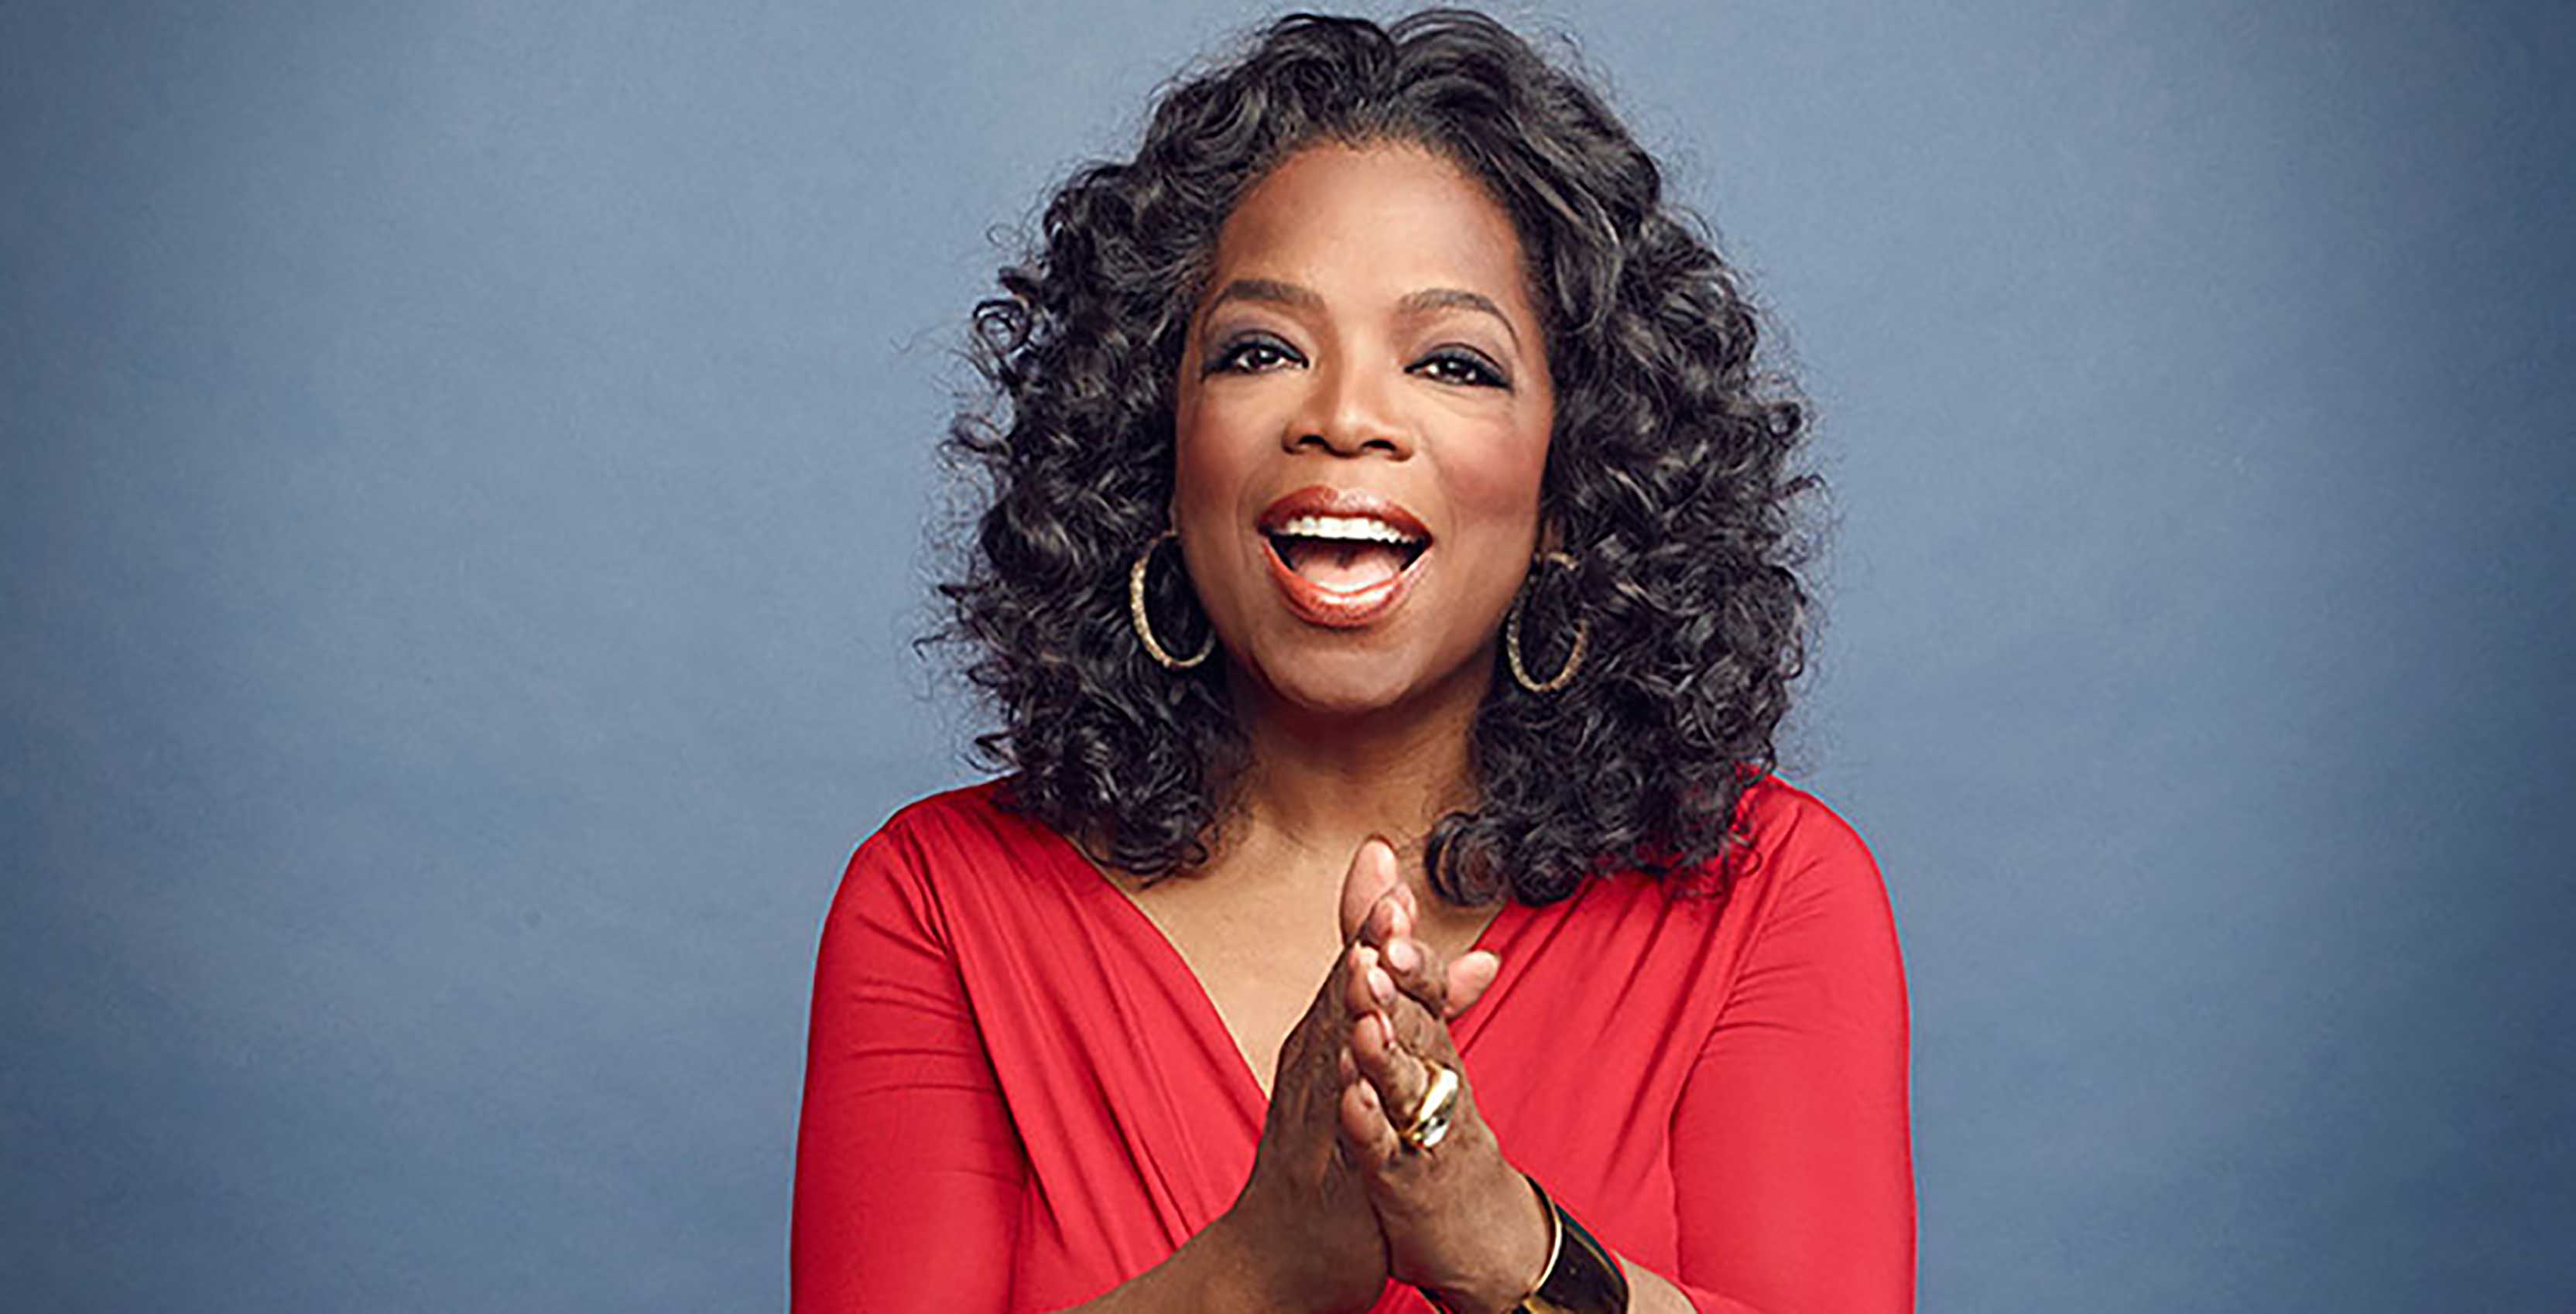 Apple signs multiyear content partnership with Oprah Winfrey